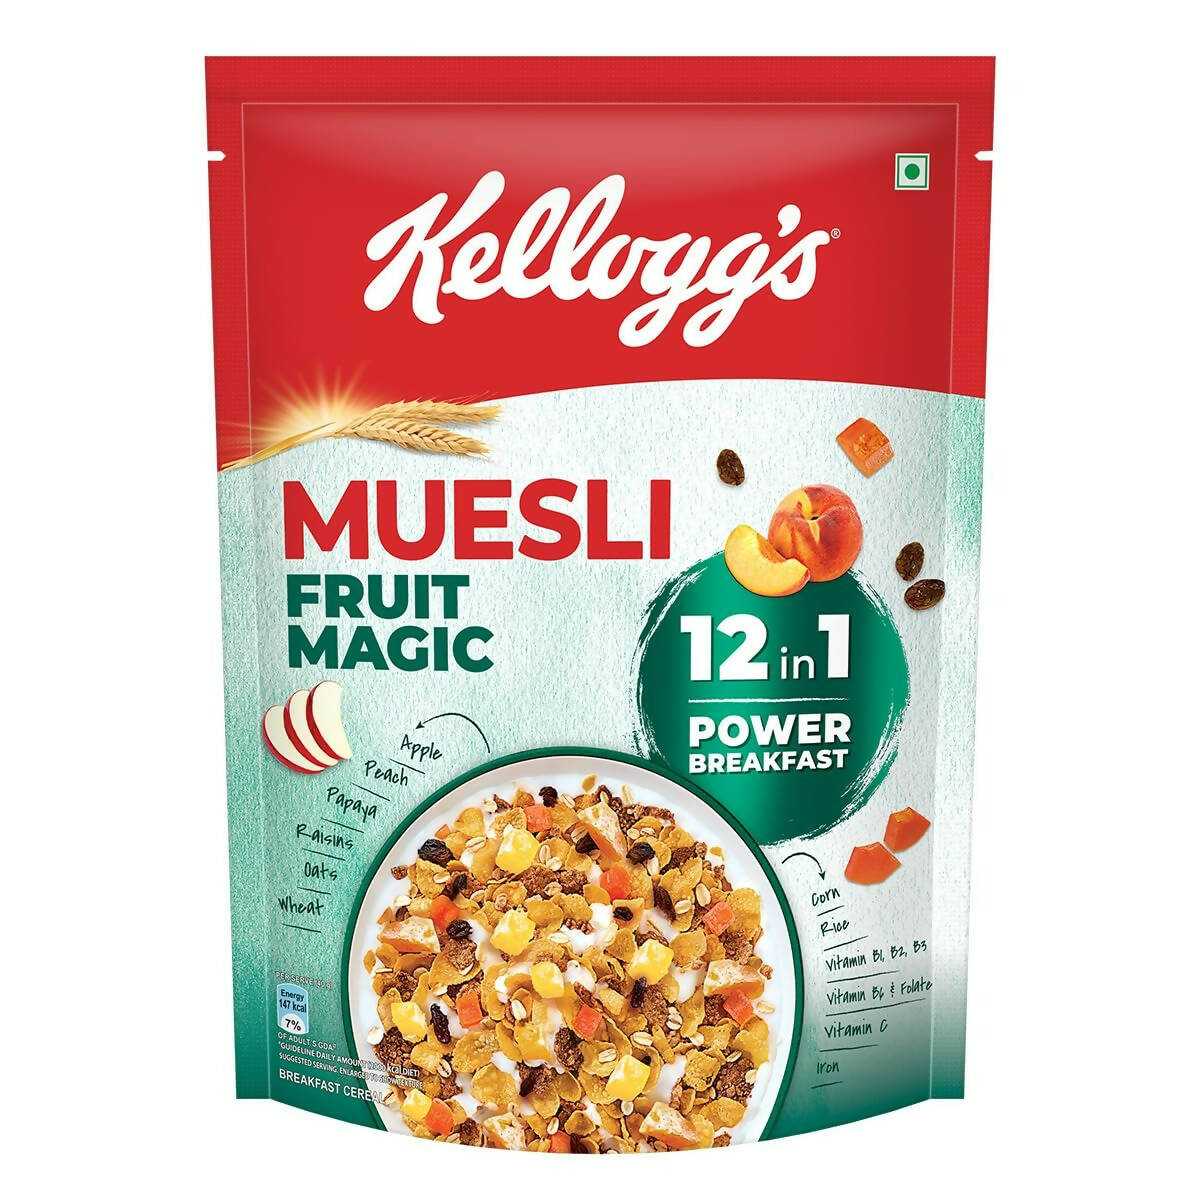 Kellogg's Muesli Fruit Magic